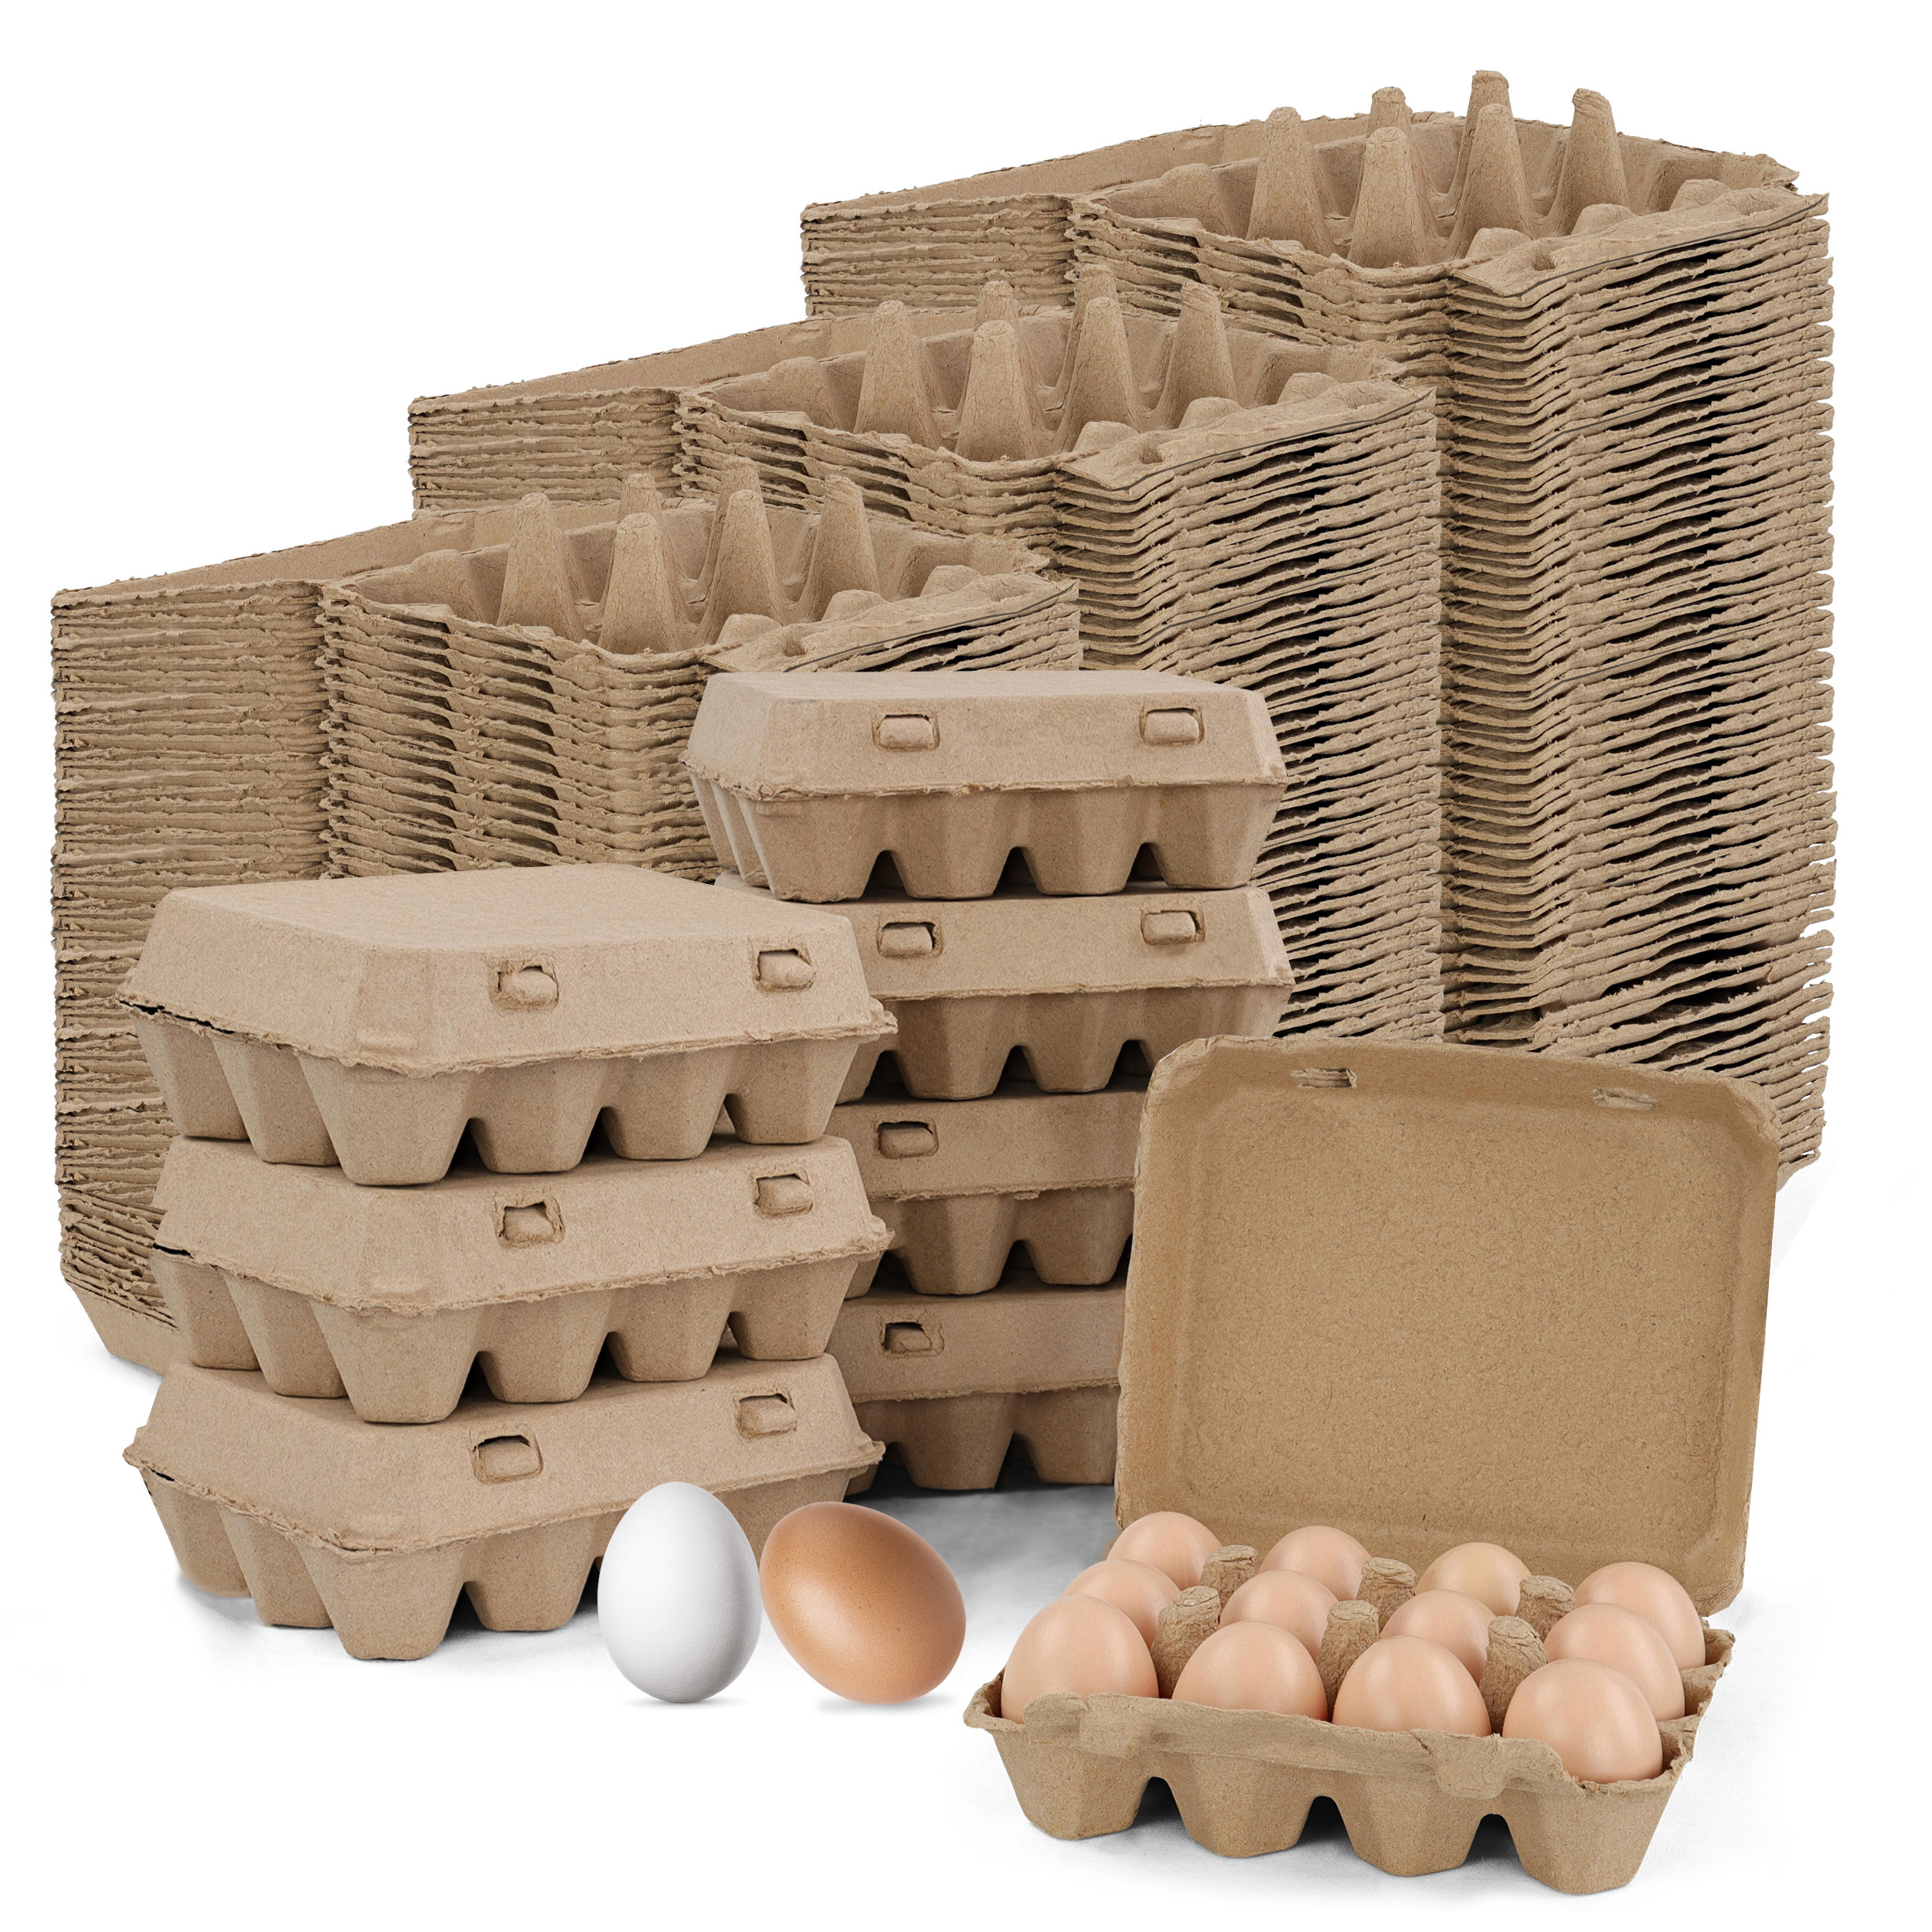 Ruralty Recycled Cardboard Egg Cartons 200ct Dozen 4x3 Vintage Bulk Egg Cartons - image 1 of 7